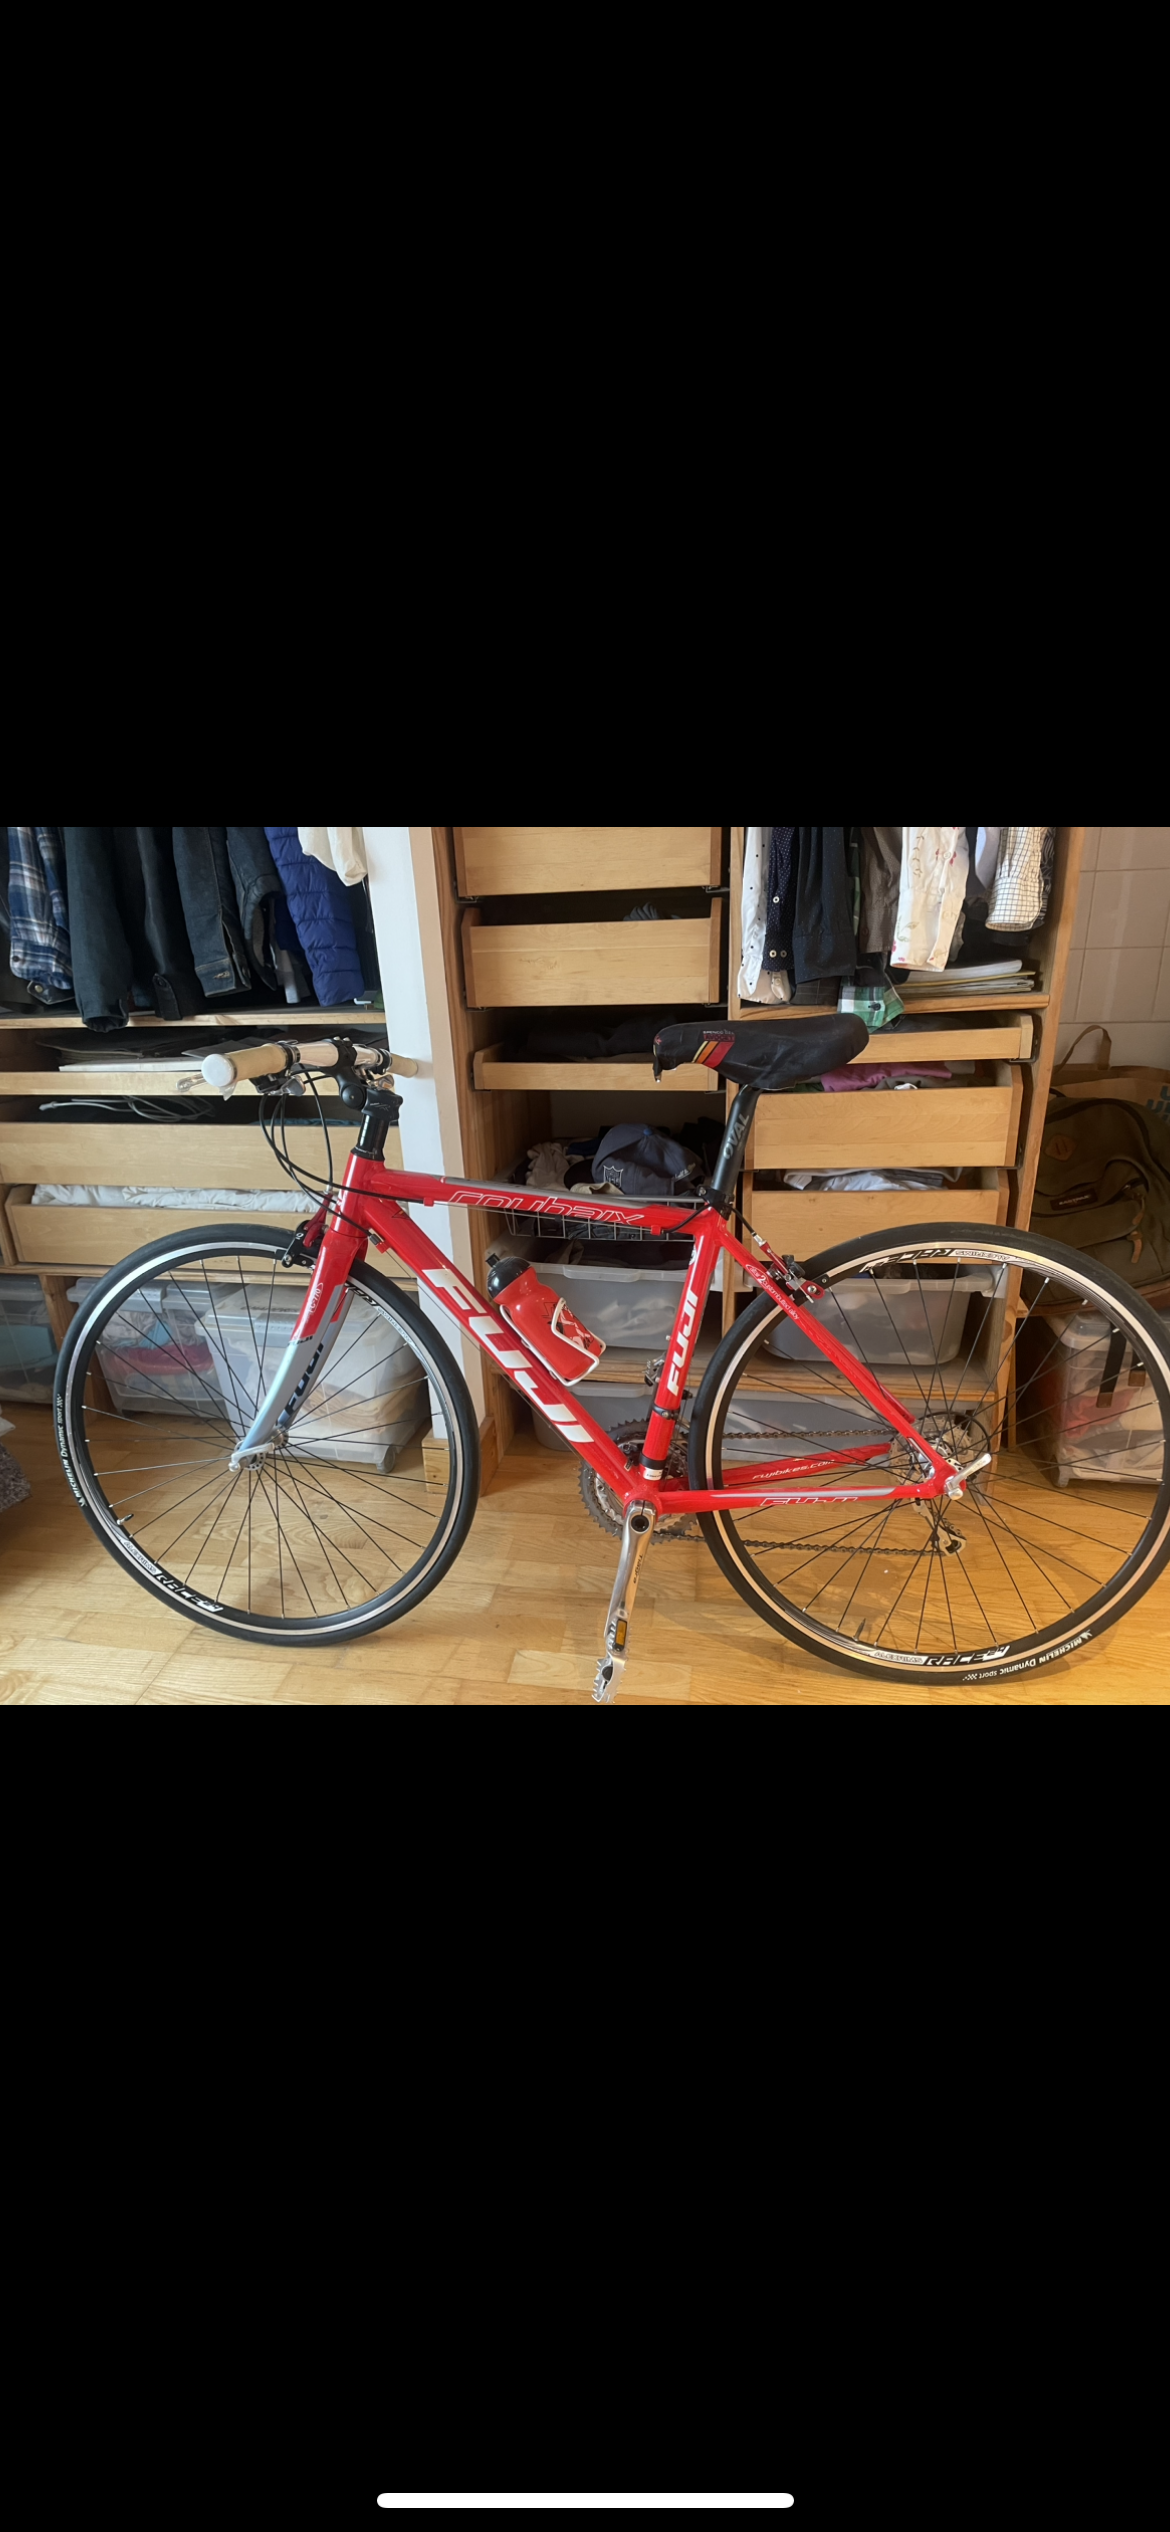 Fuji Roubaix 1.0 used in 46 cm | buycycle USA